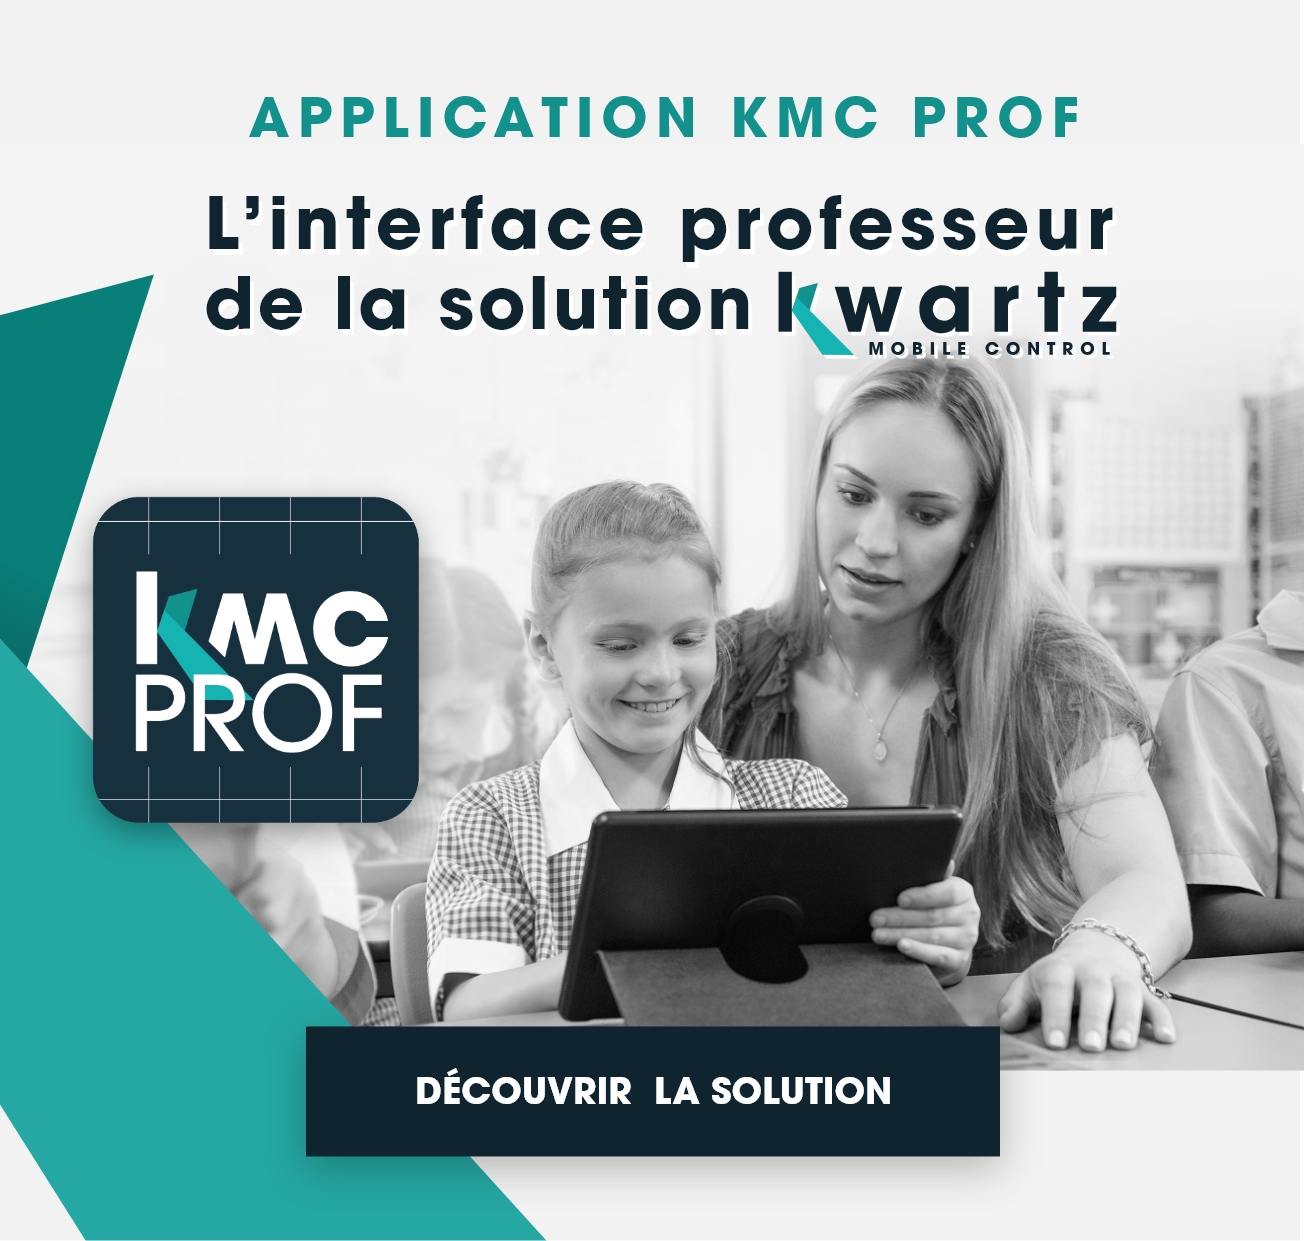 app kmc prof